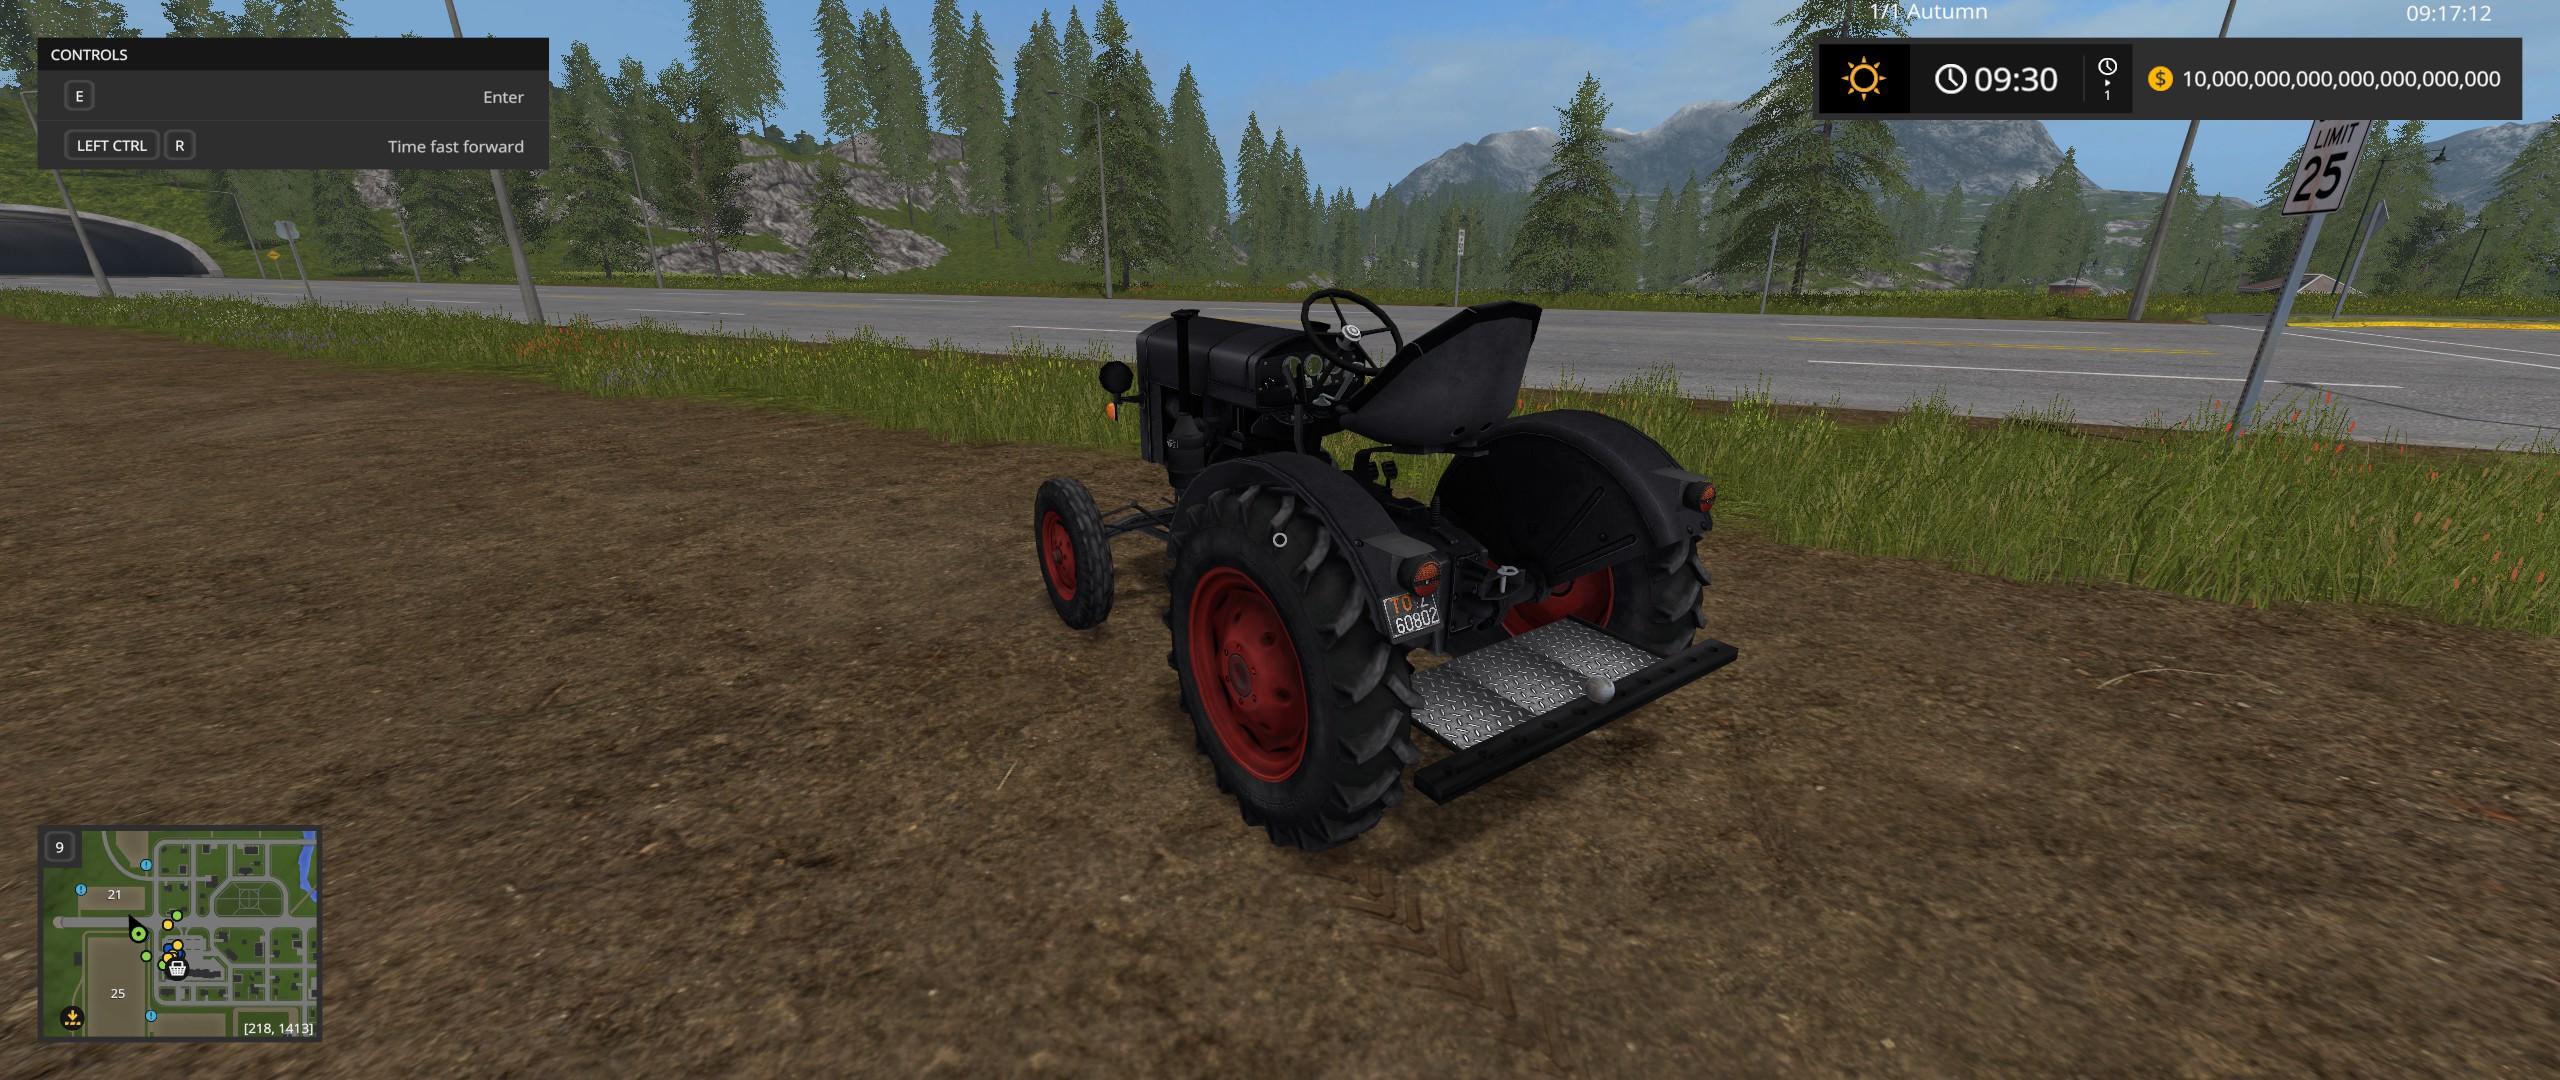 Fahr Tractor V10 Fs17 Farming Simulator 17 Mod Fs 2017 Mod